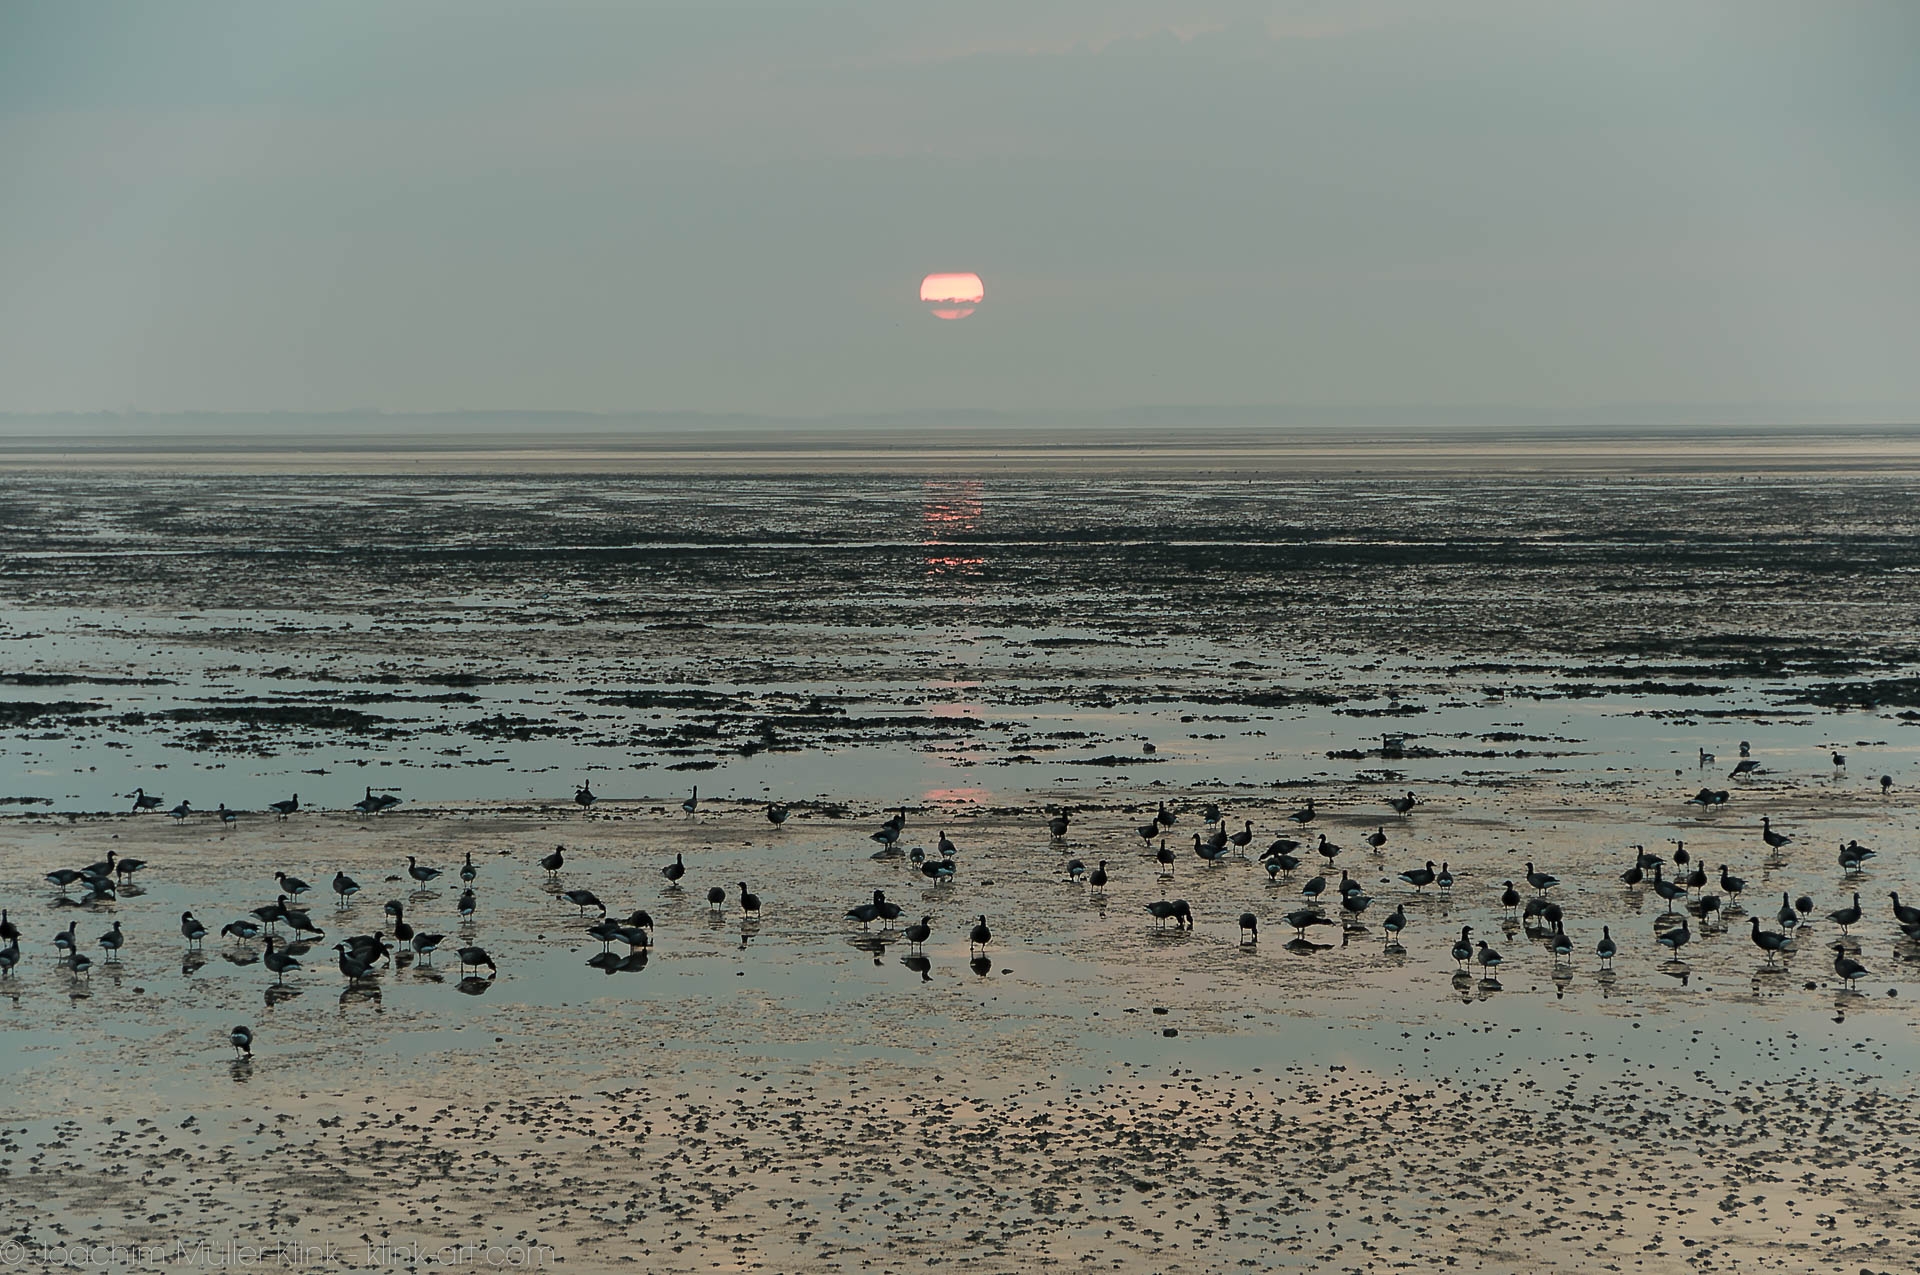 Wildgänse im Wattenmeer - Wild geese in the Wadden Sea